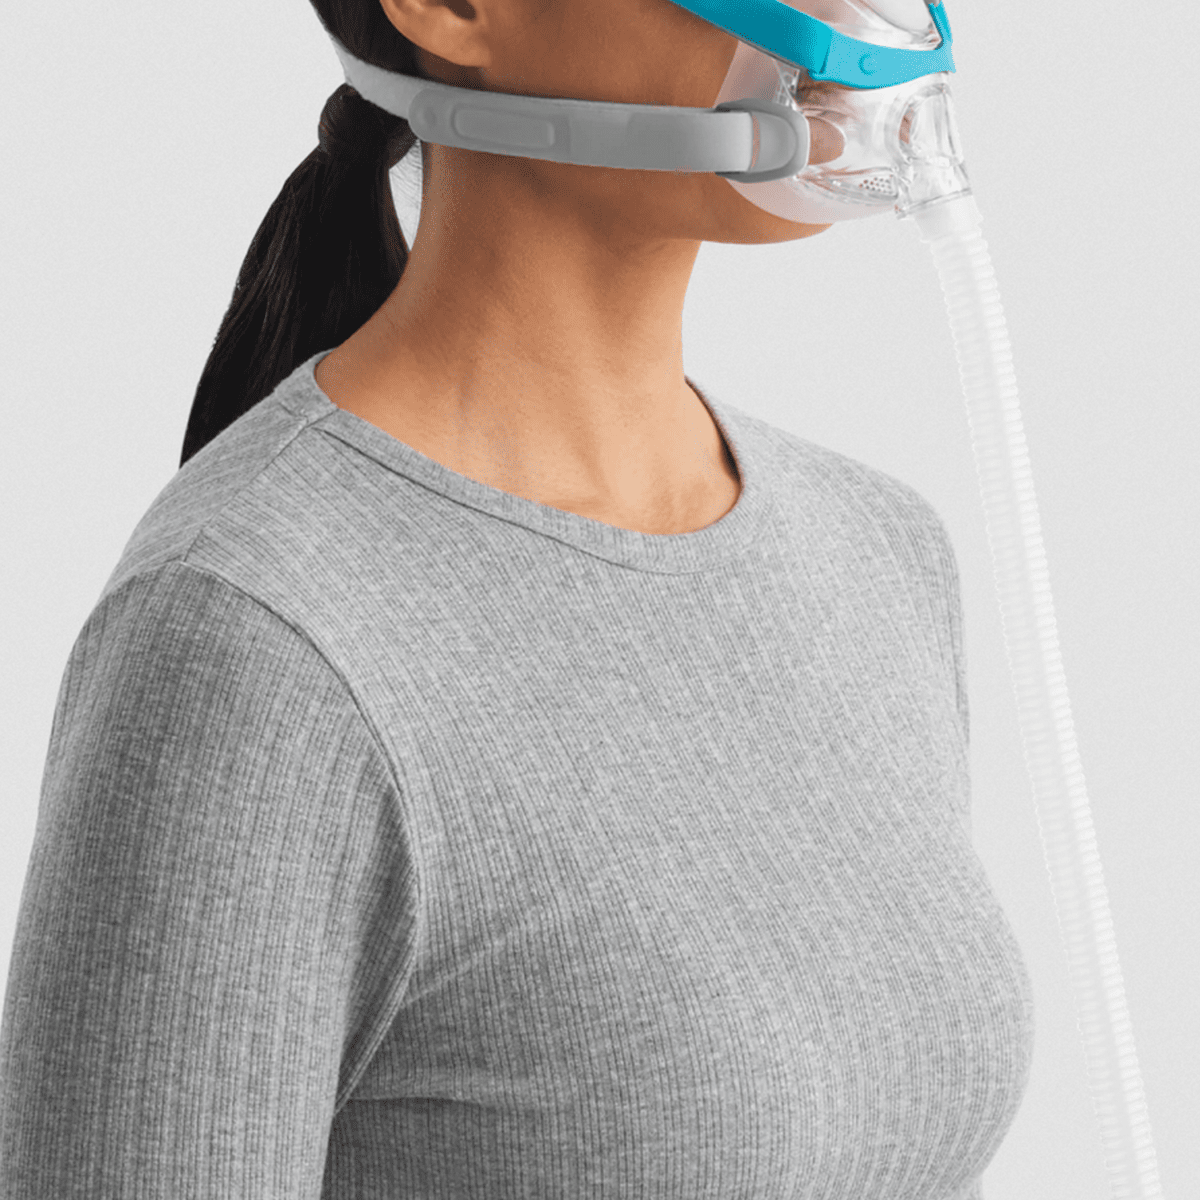 Evora Full Face CPAP Mask With Headgear Snore MD Sleep Apnea Clinic